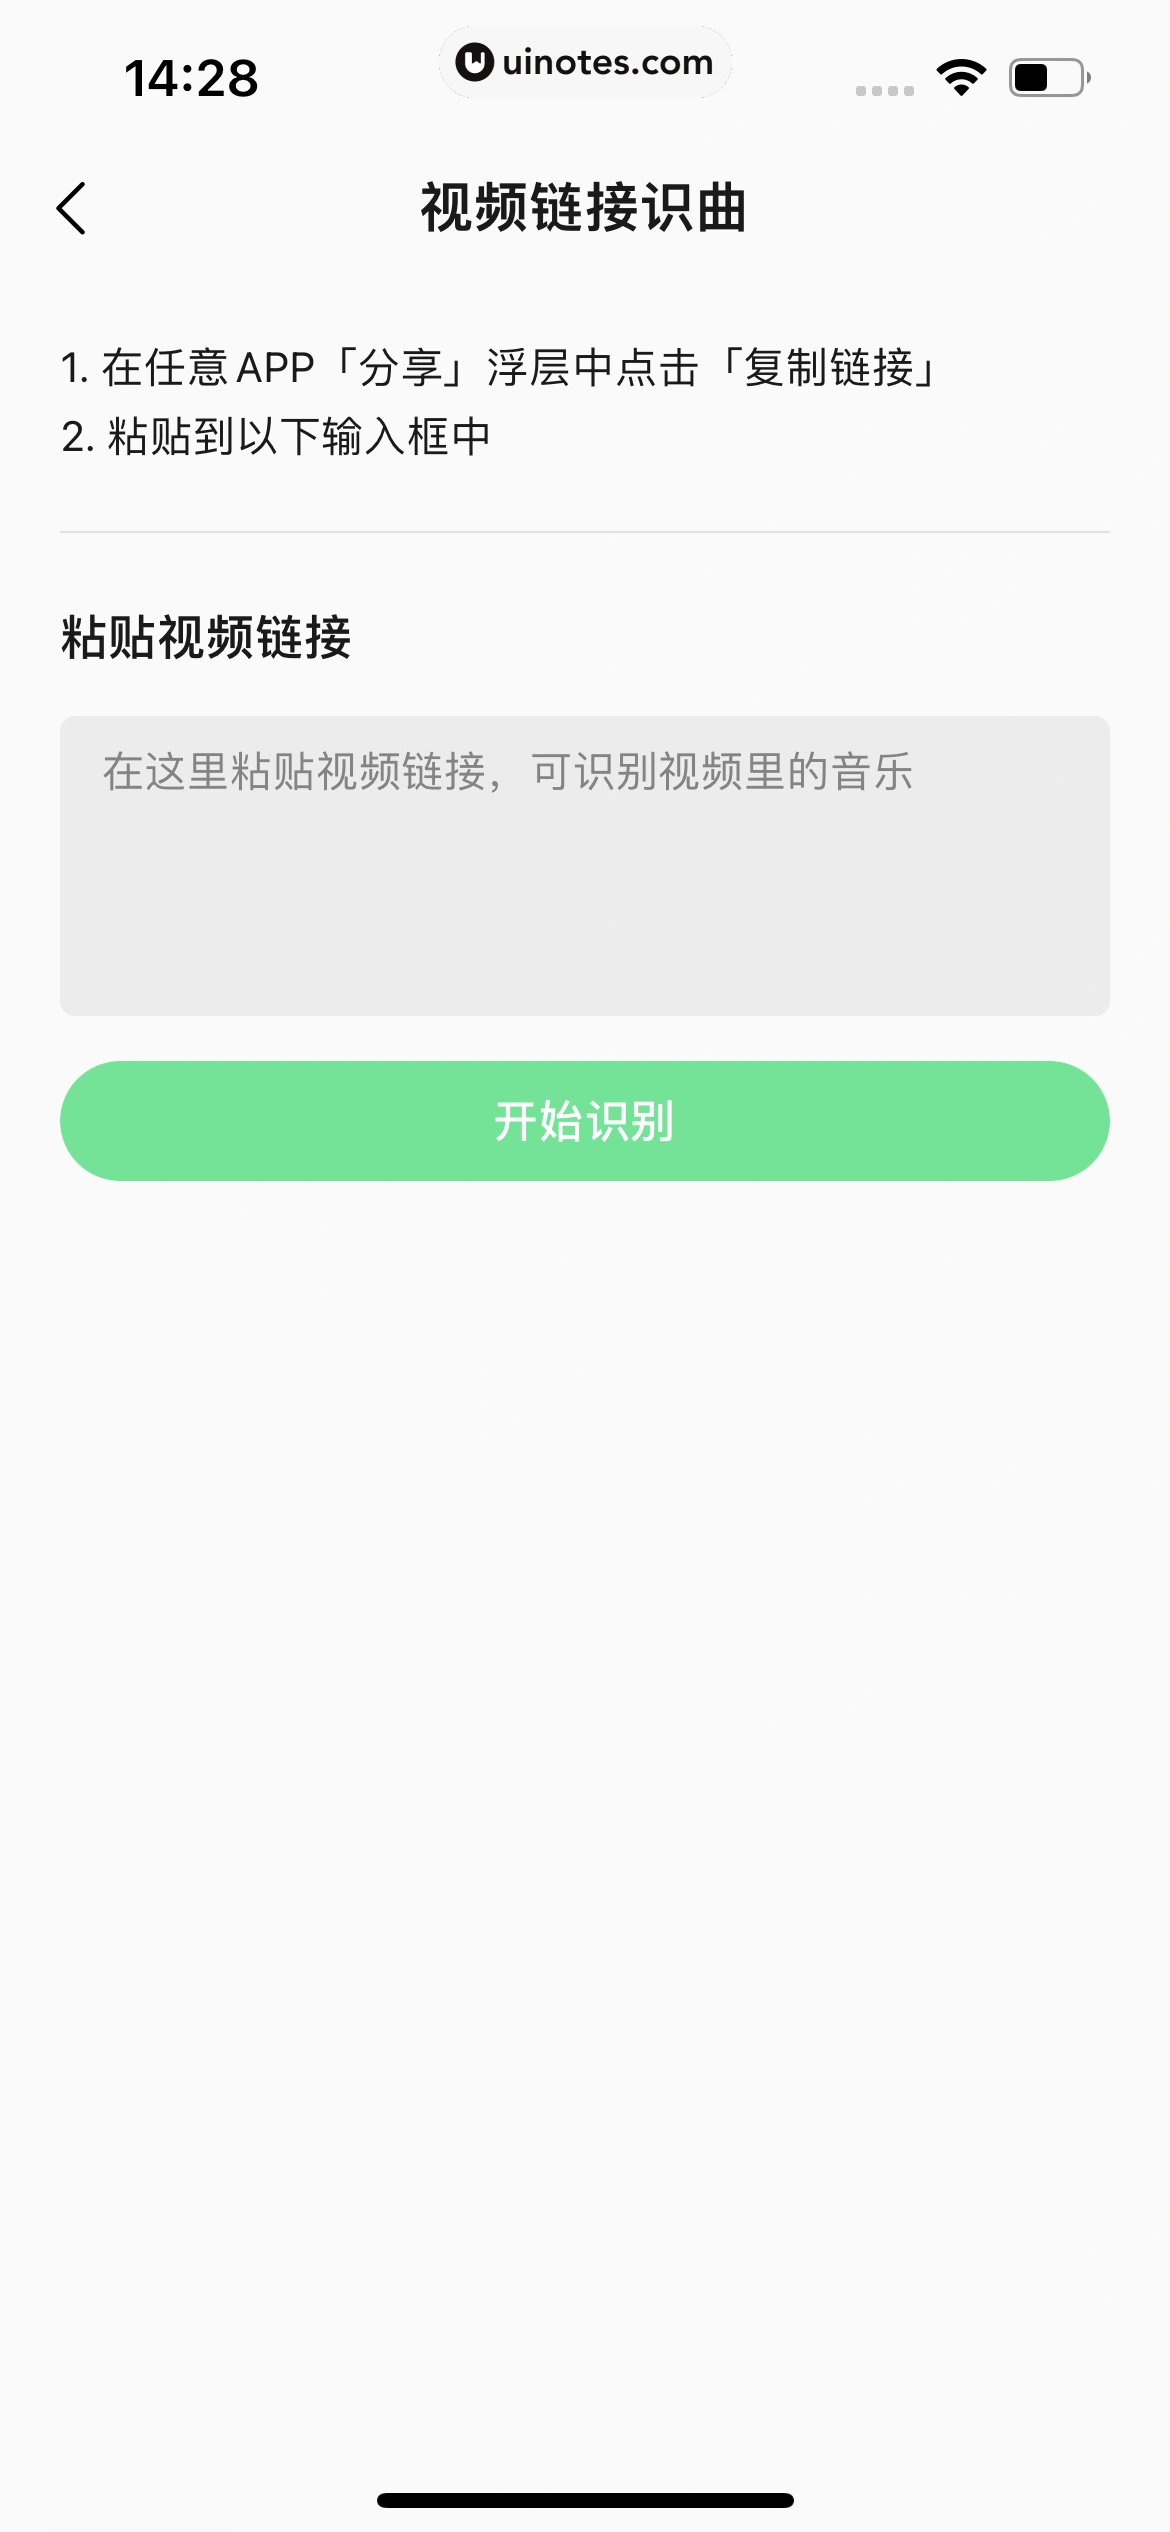 QQ音乐 App 截图 032 - UI Notes